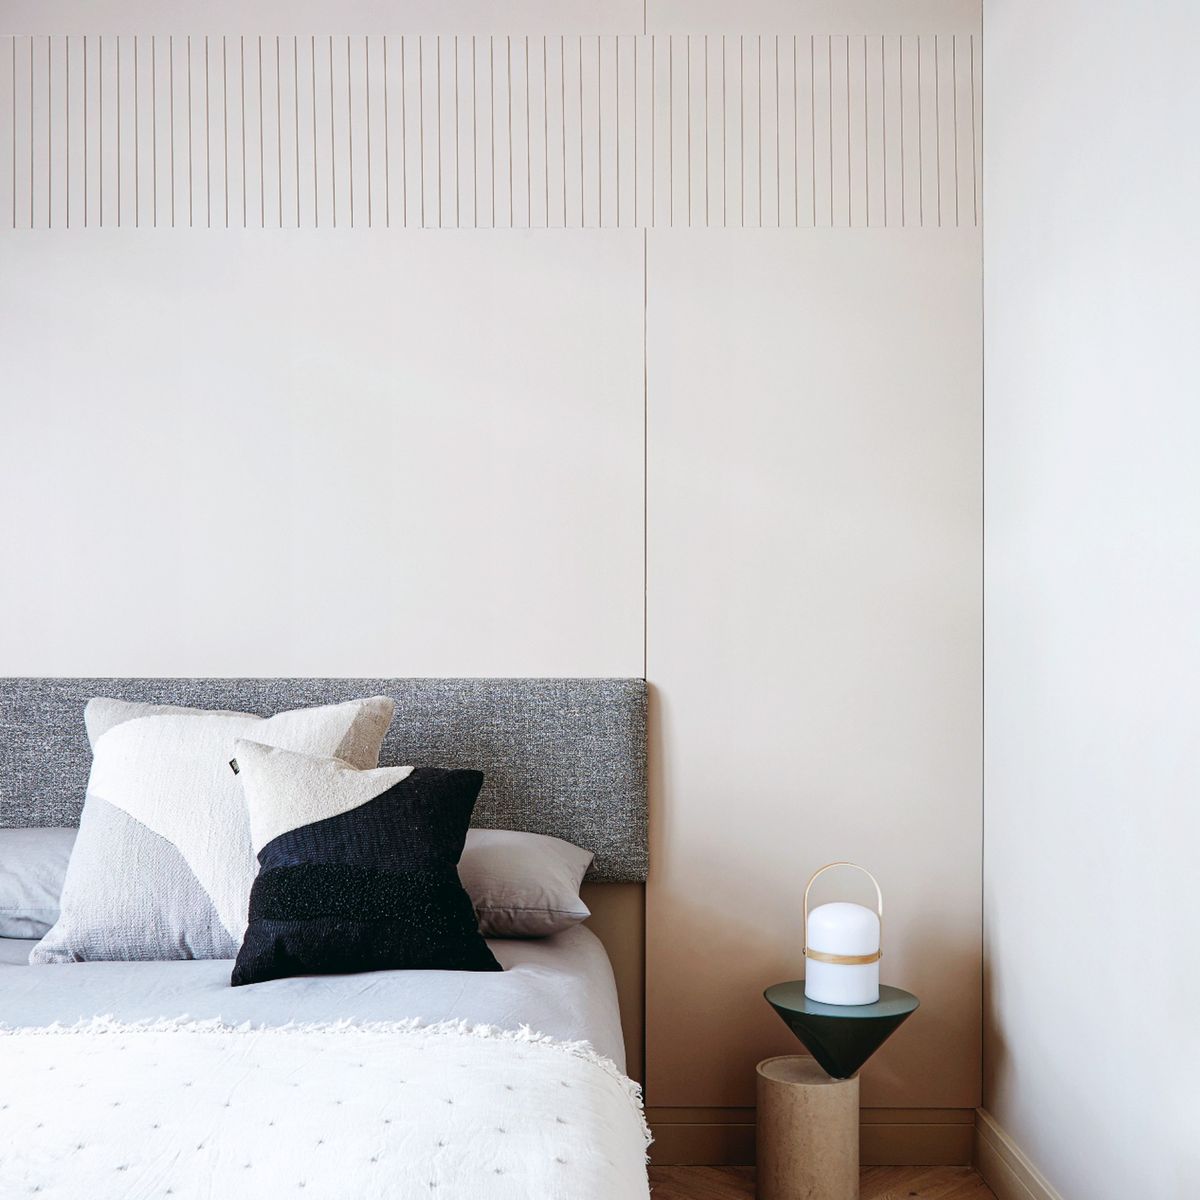 The Big Interior Battles’ judge, Dara Huang, reveals the worst bedroom design mistake to make